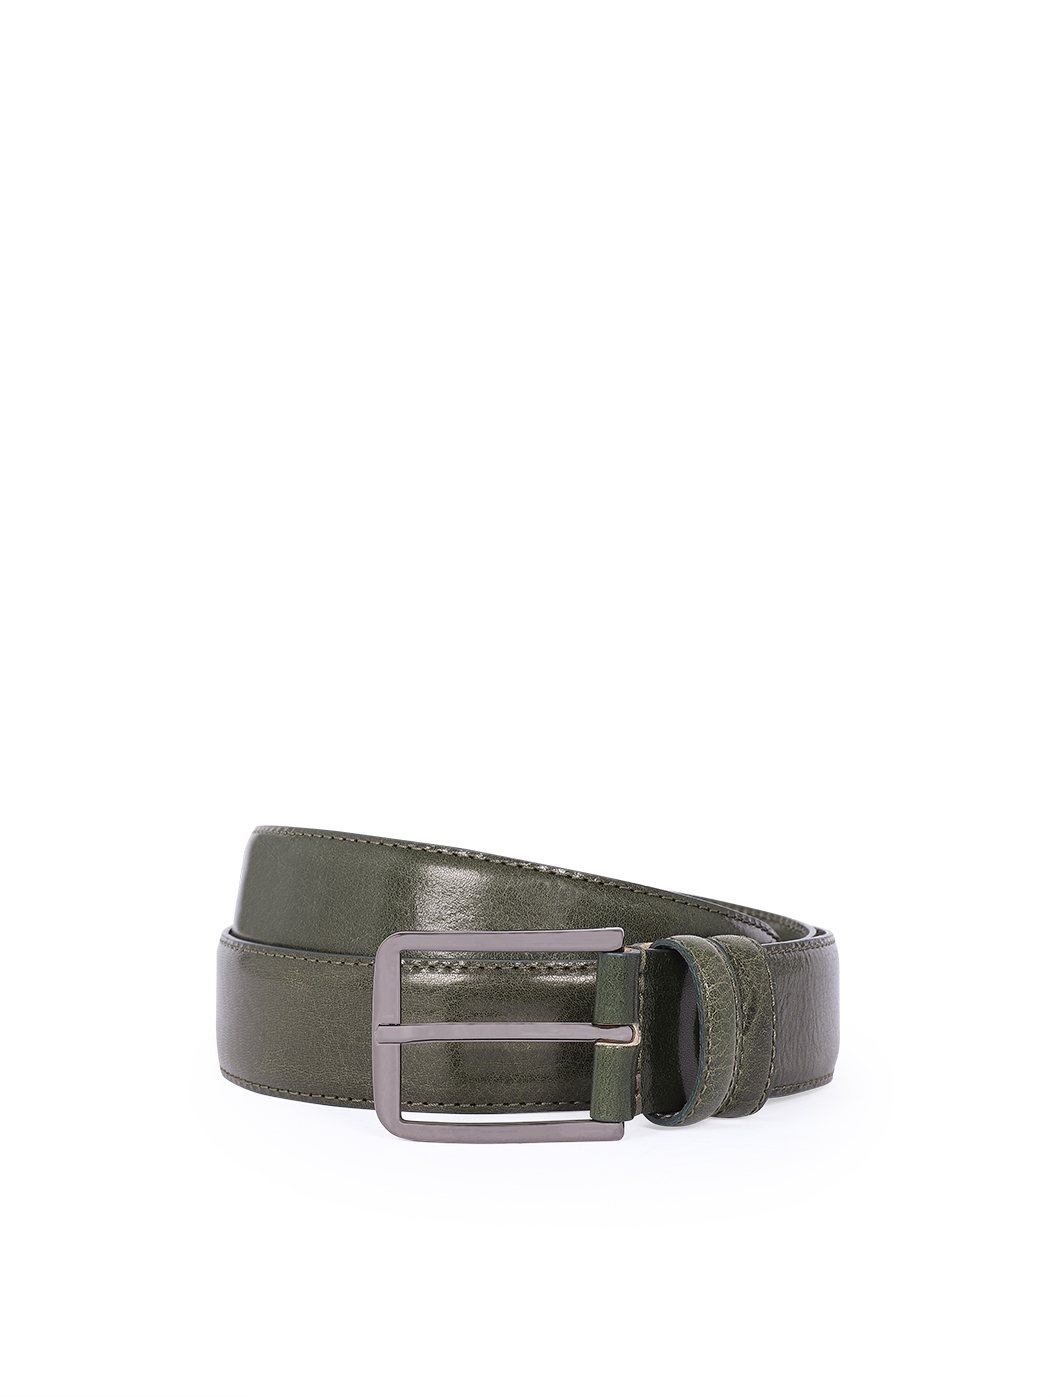 Classic green leather belt